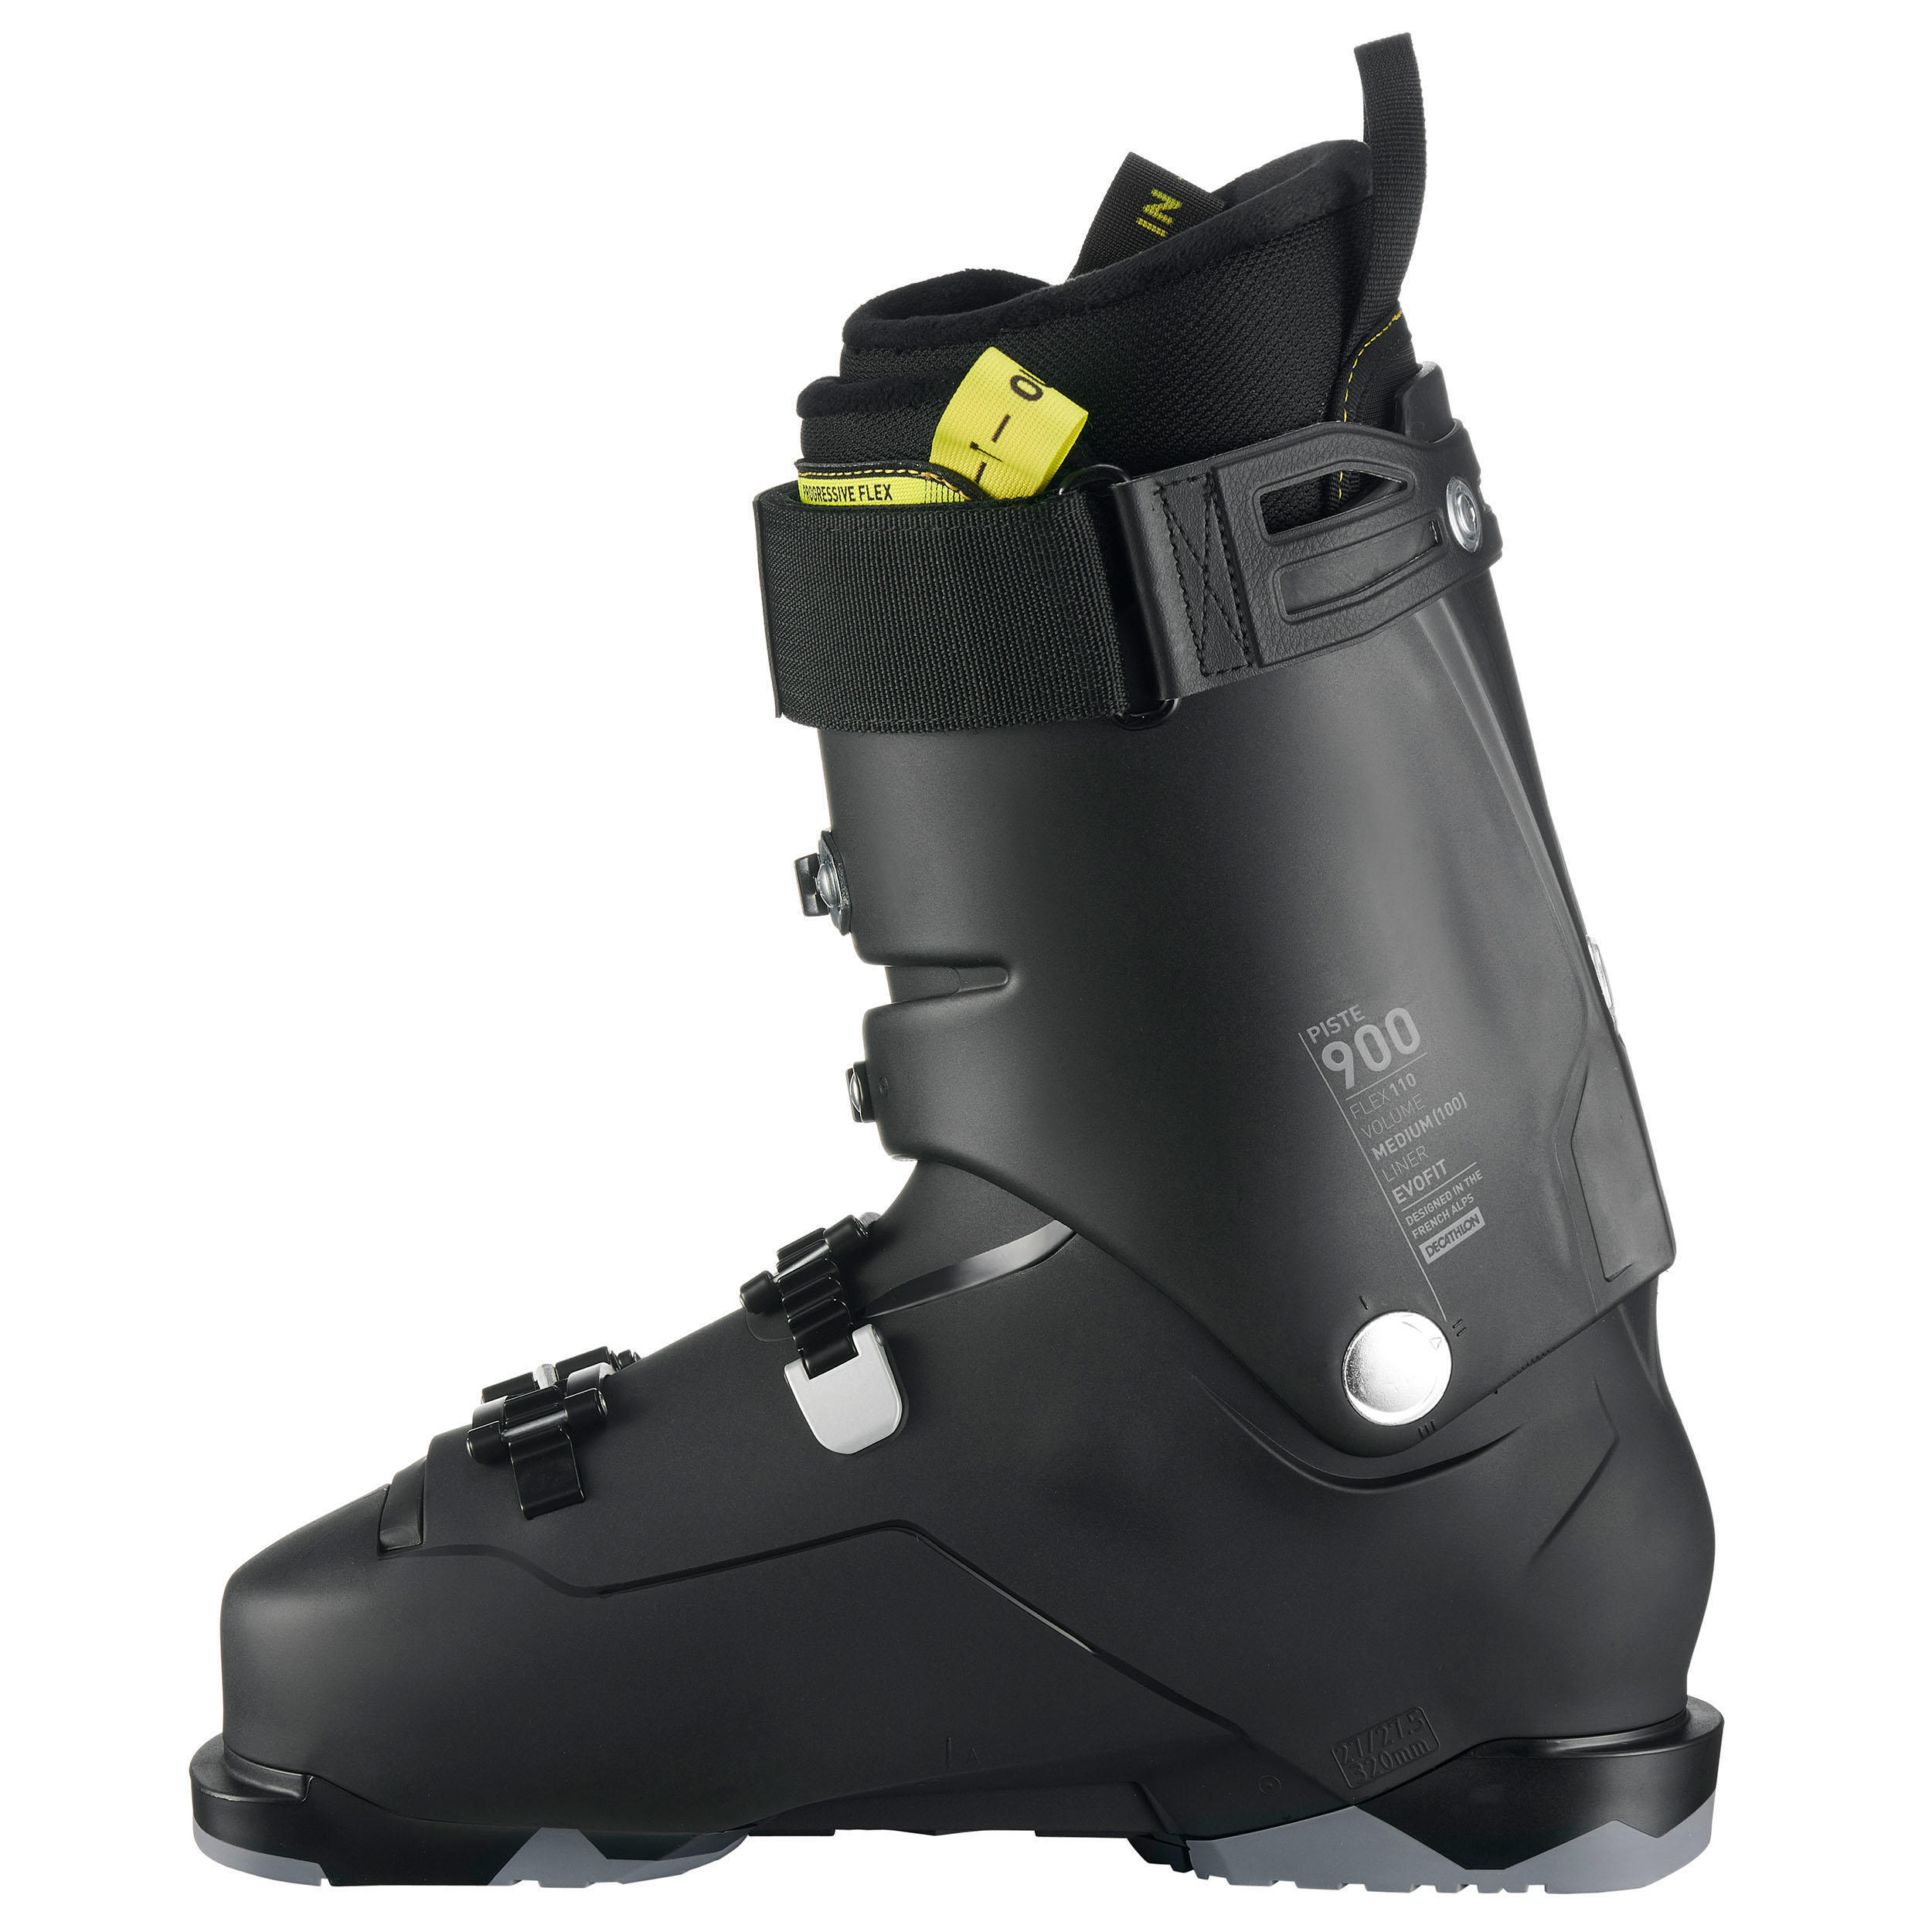 Refurbished Mens Downhill Ski Boots Fit Black Yellow - C Grade 6/7